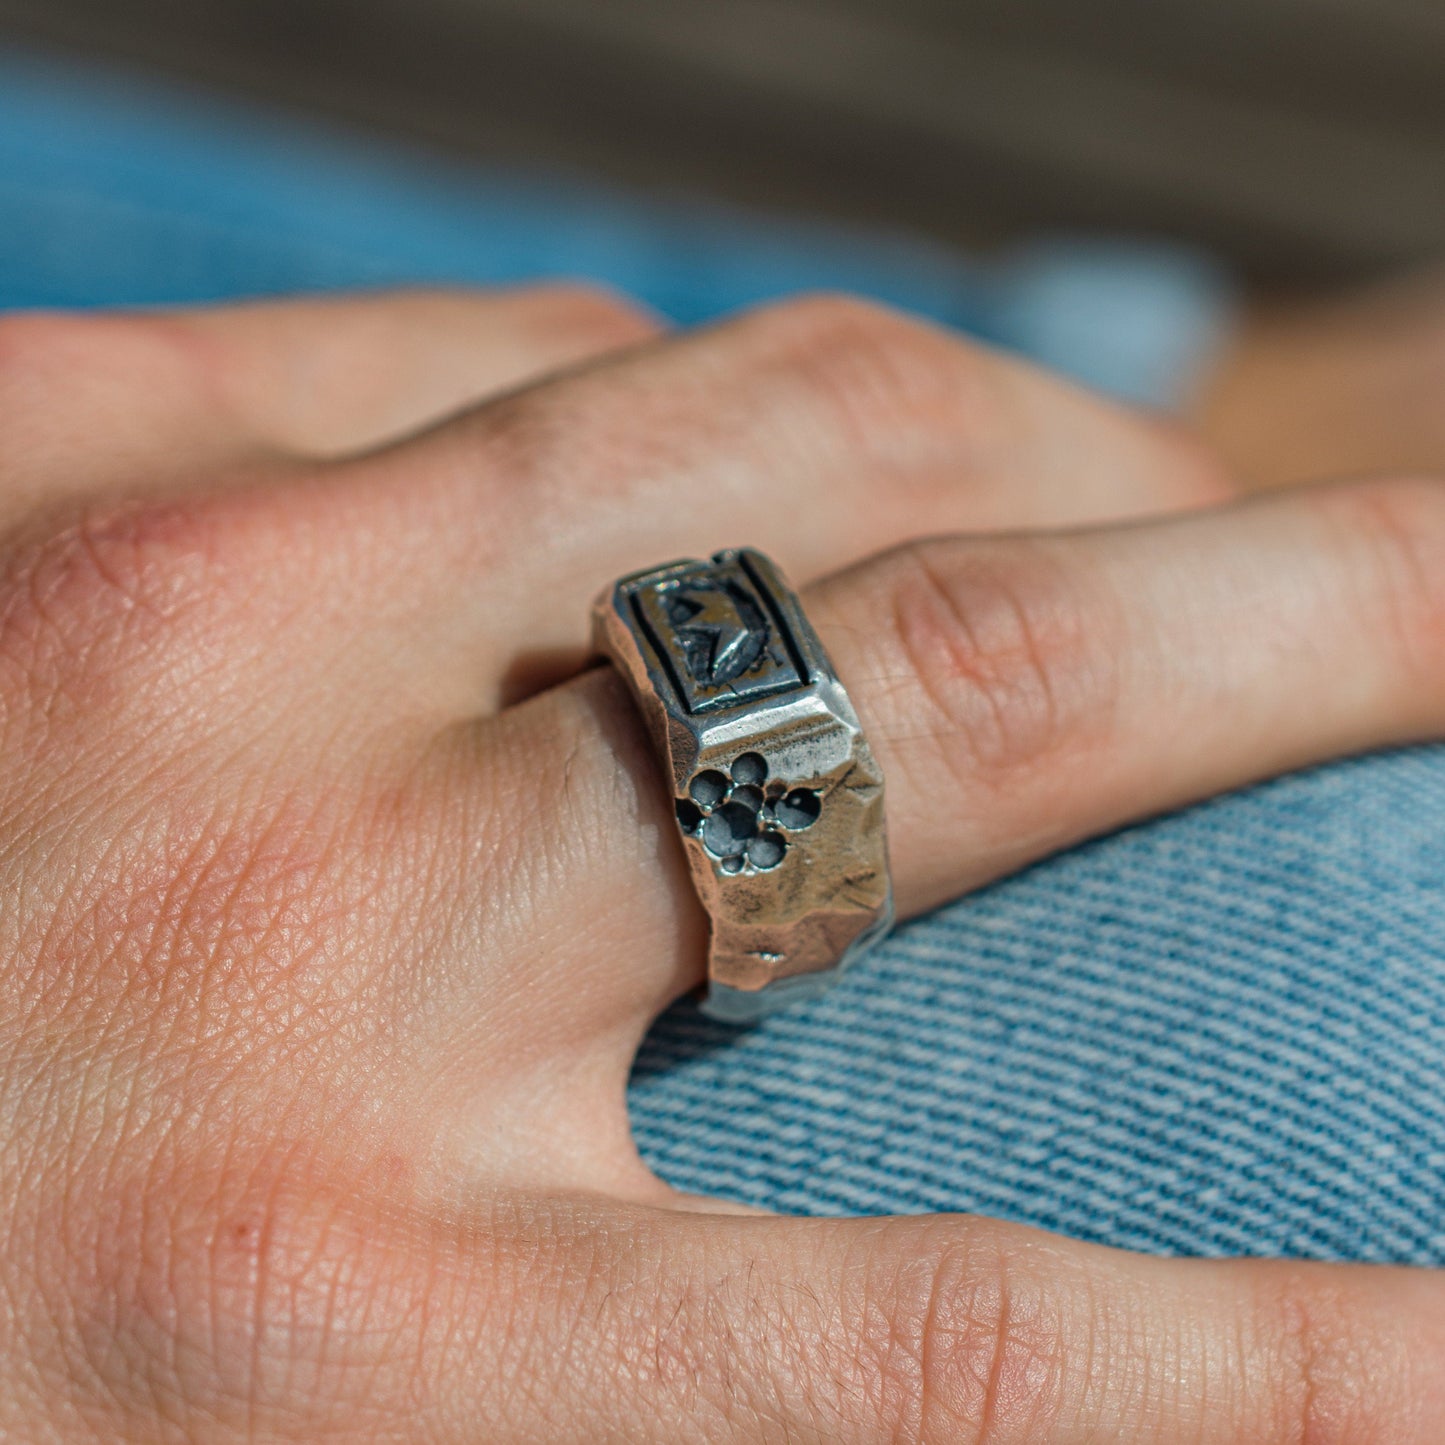 Antique-Inspired King Arthur Crown Signet Ring